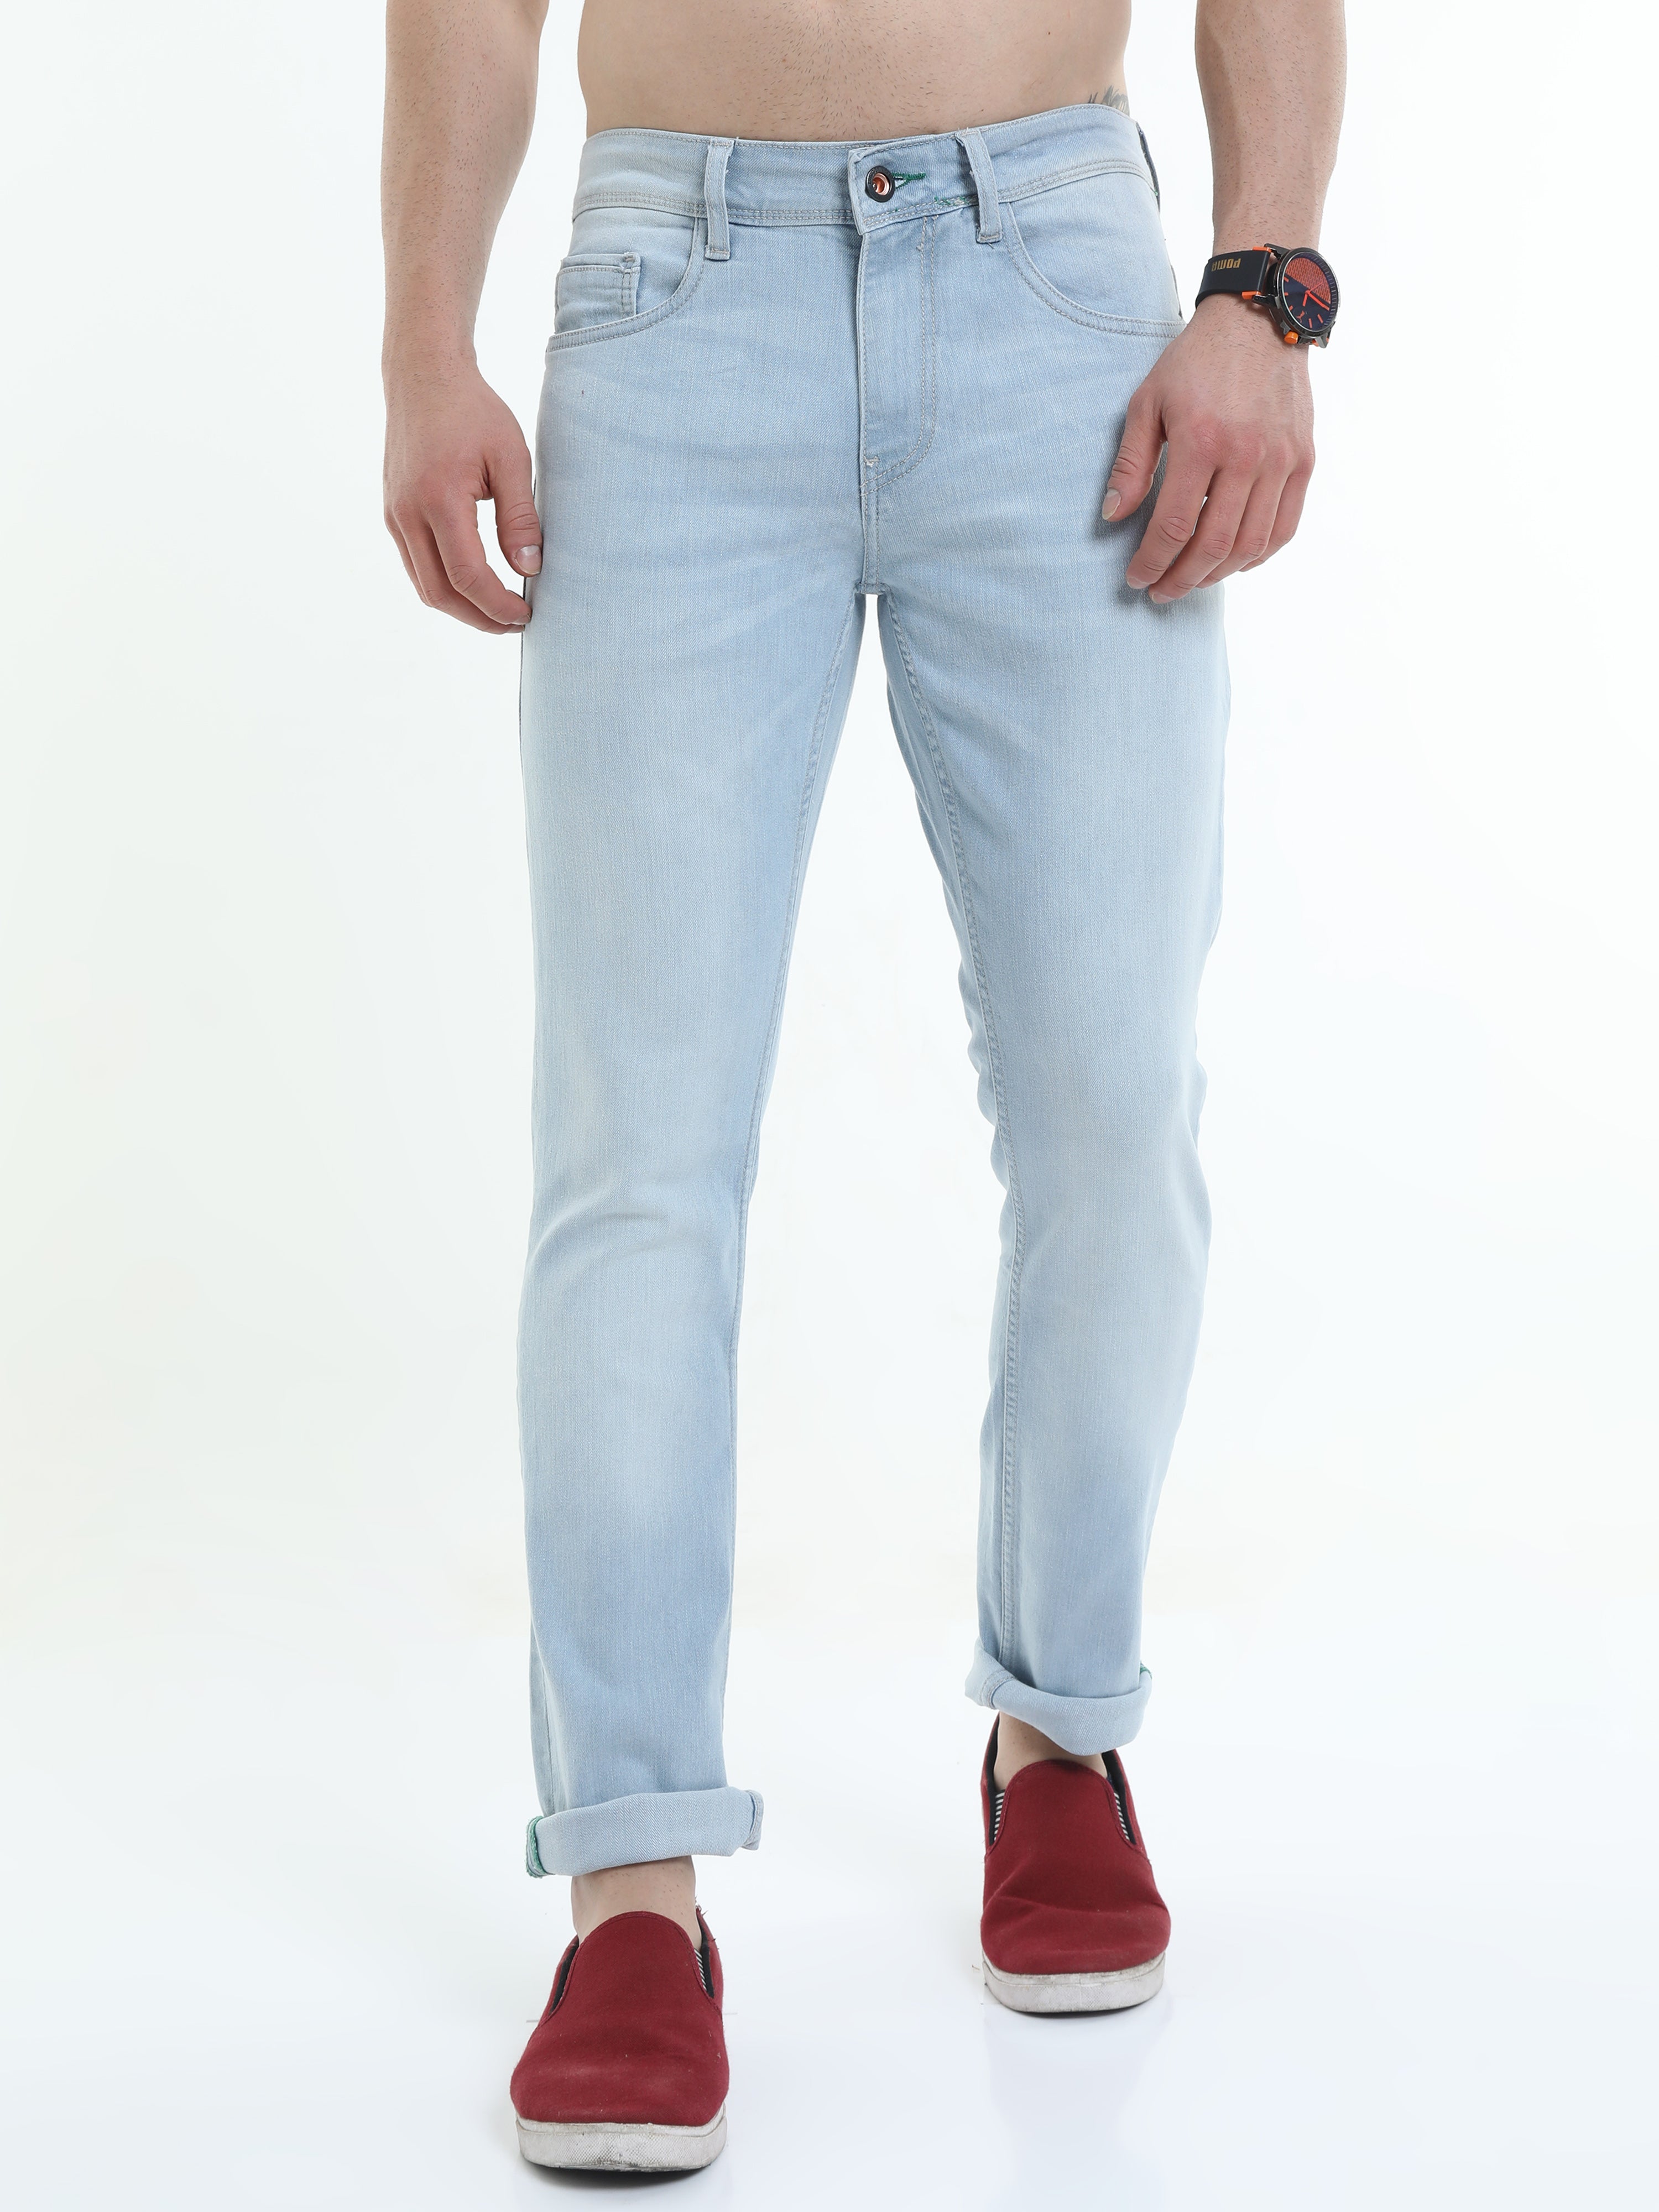 Elegance Slim Men's Slim Fit Blue Jeans